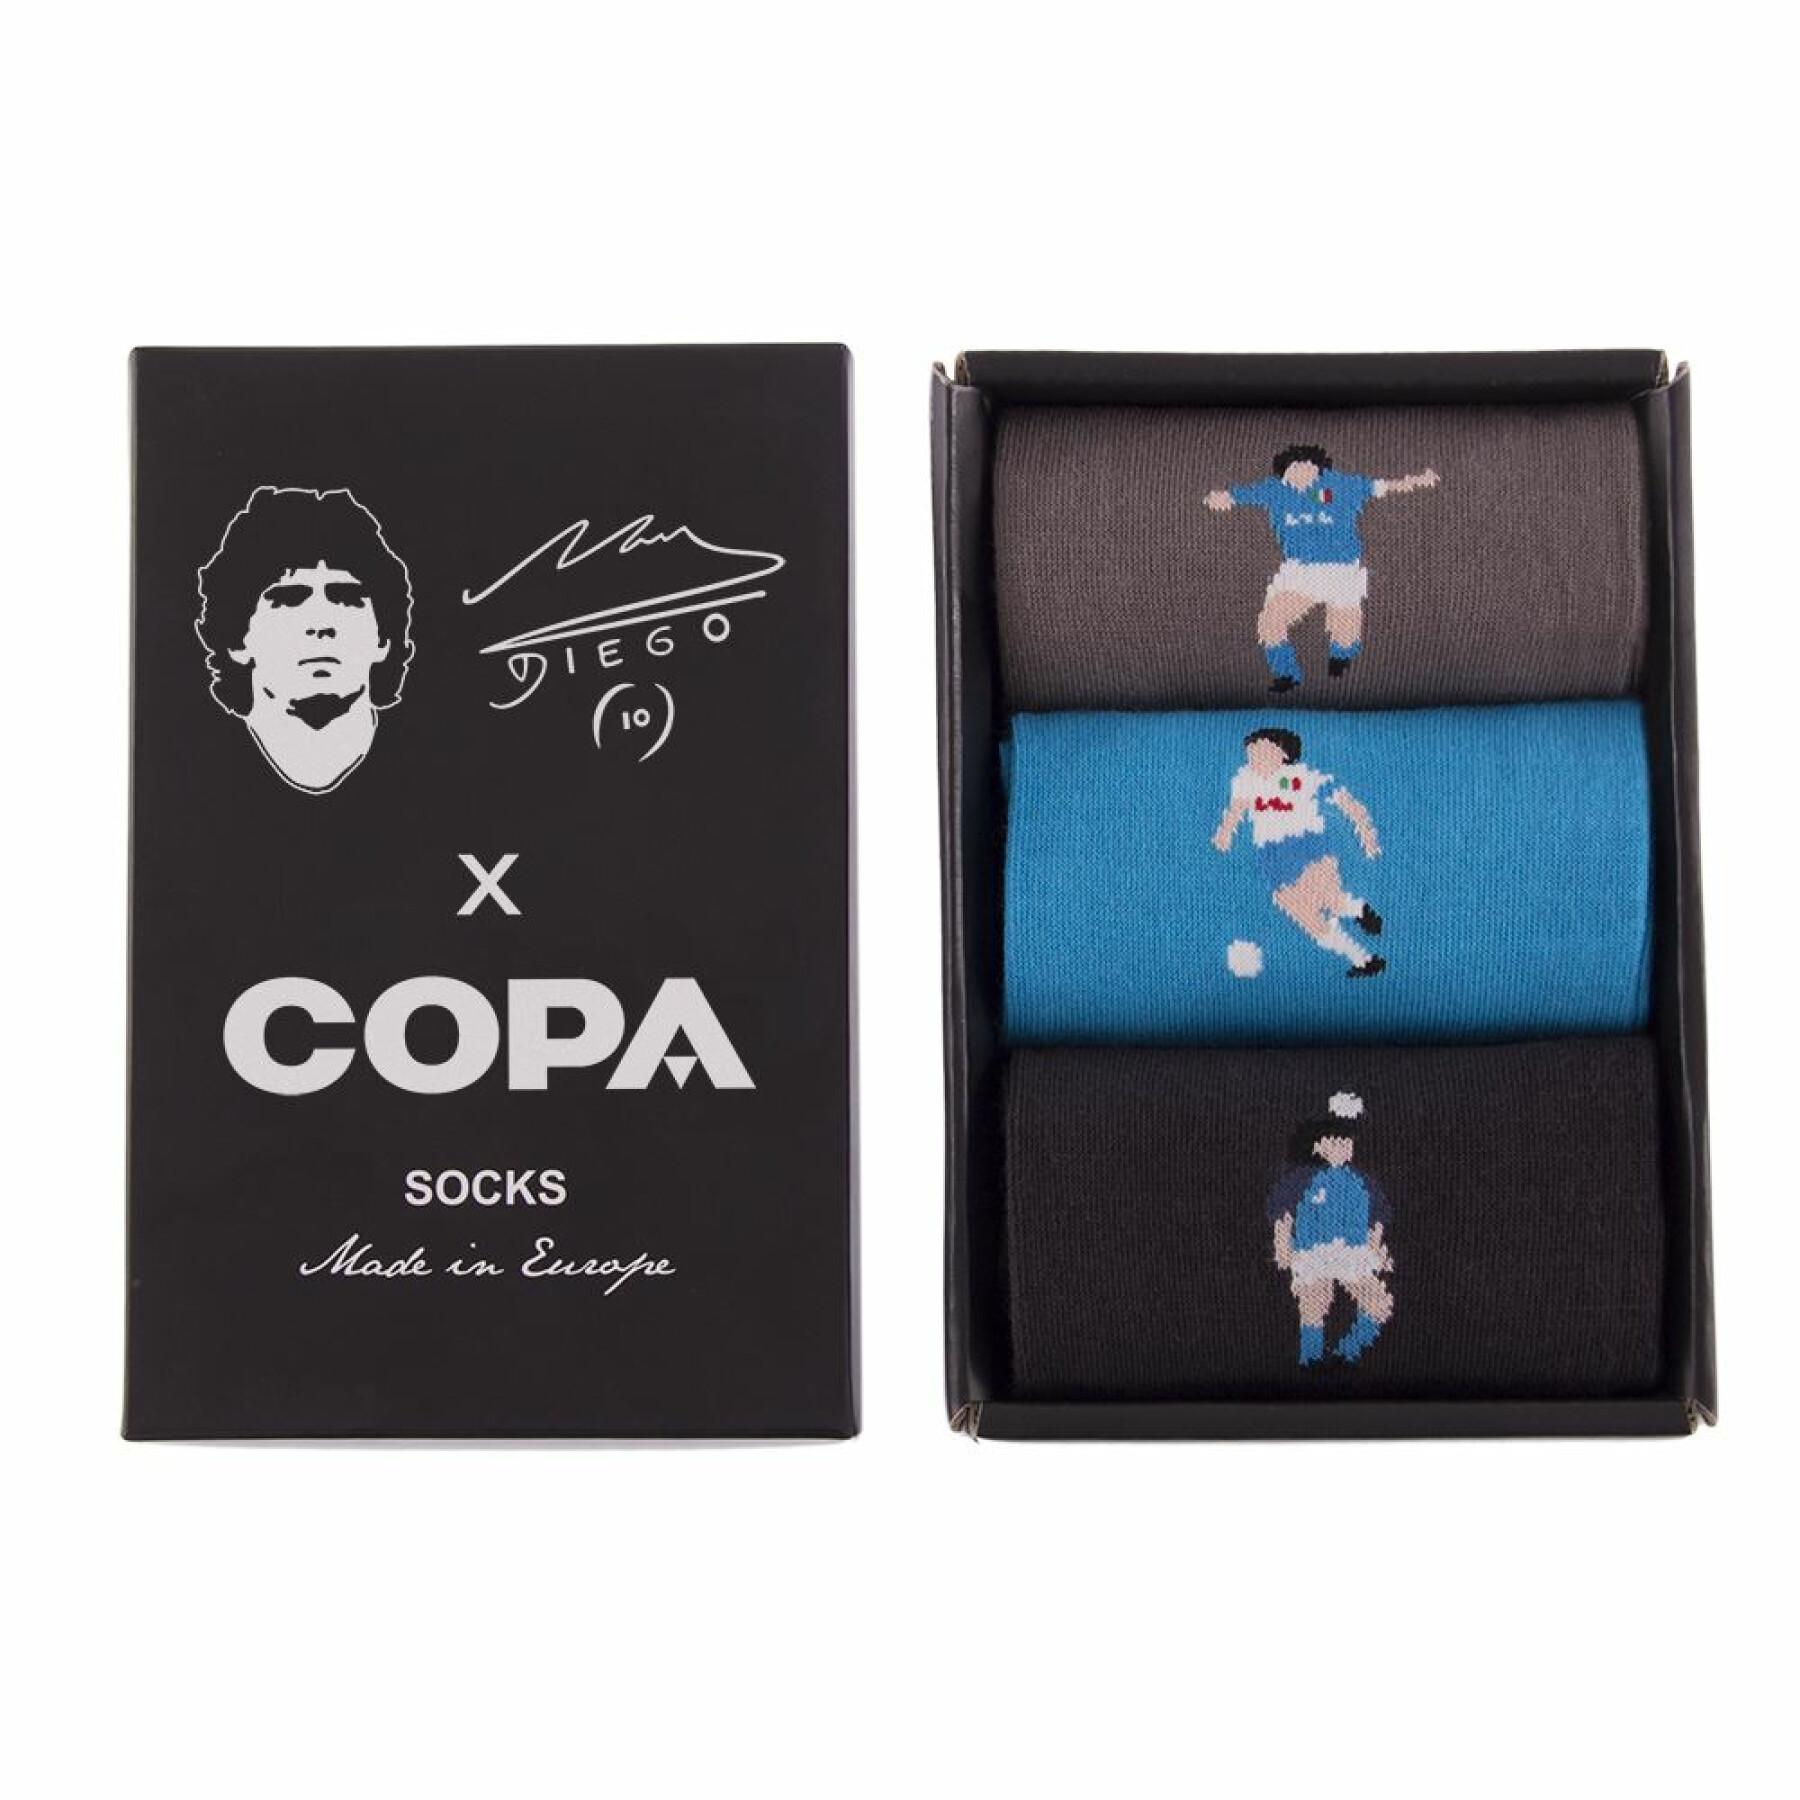 Coffret de chaussettes Copa SSC Napoli Maradona (3P)